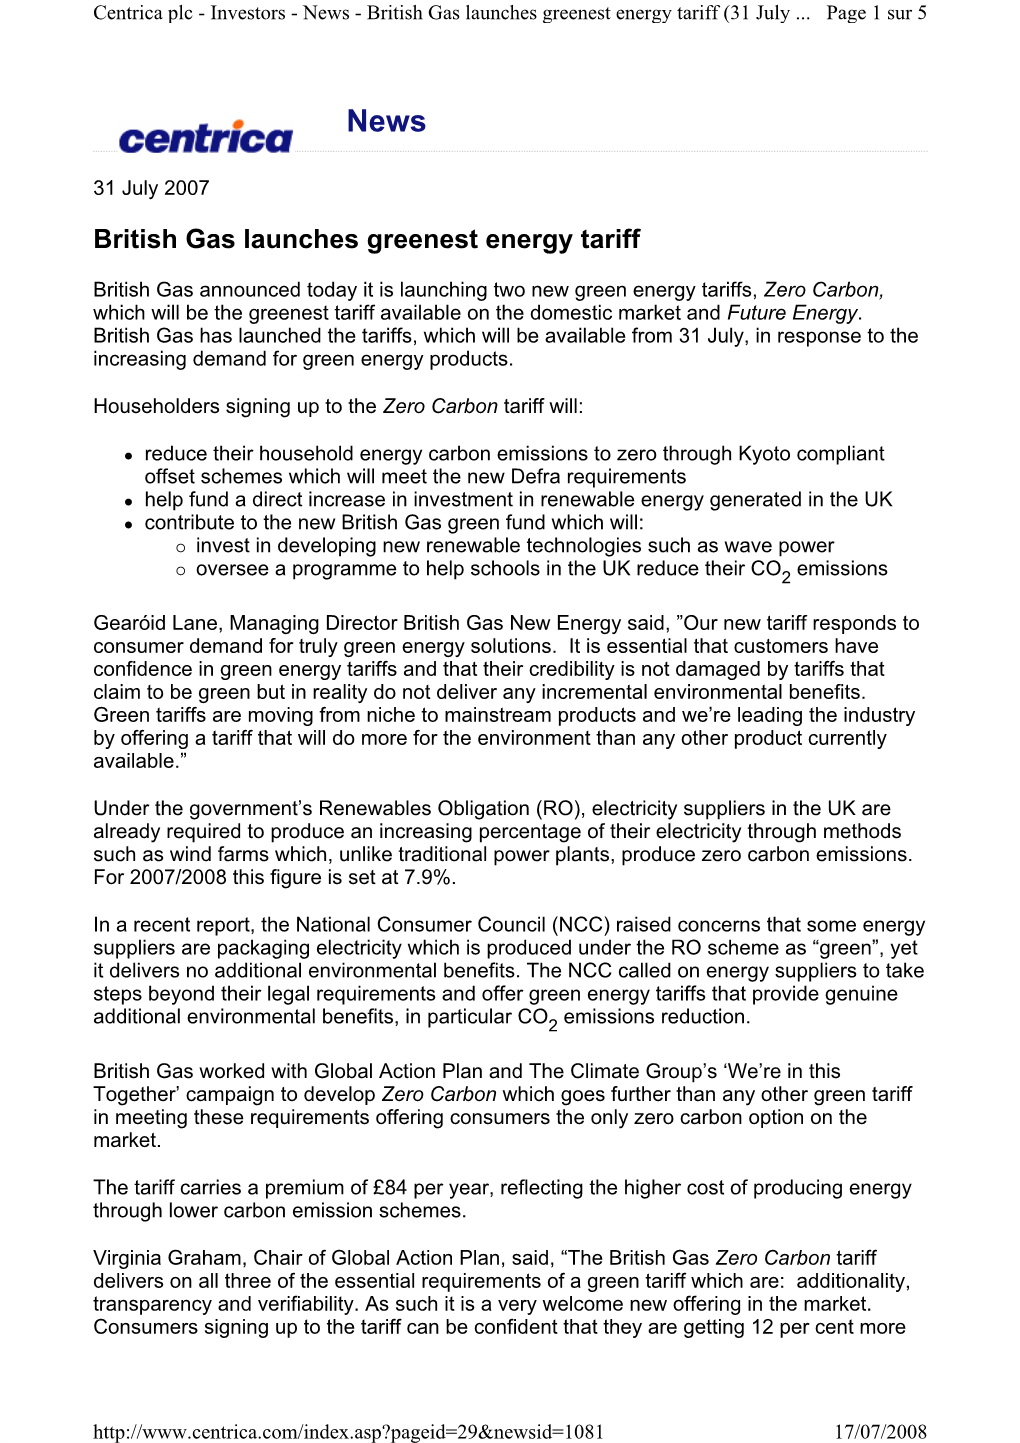 British Gas Launches Greenest Energy Tariff (31 July